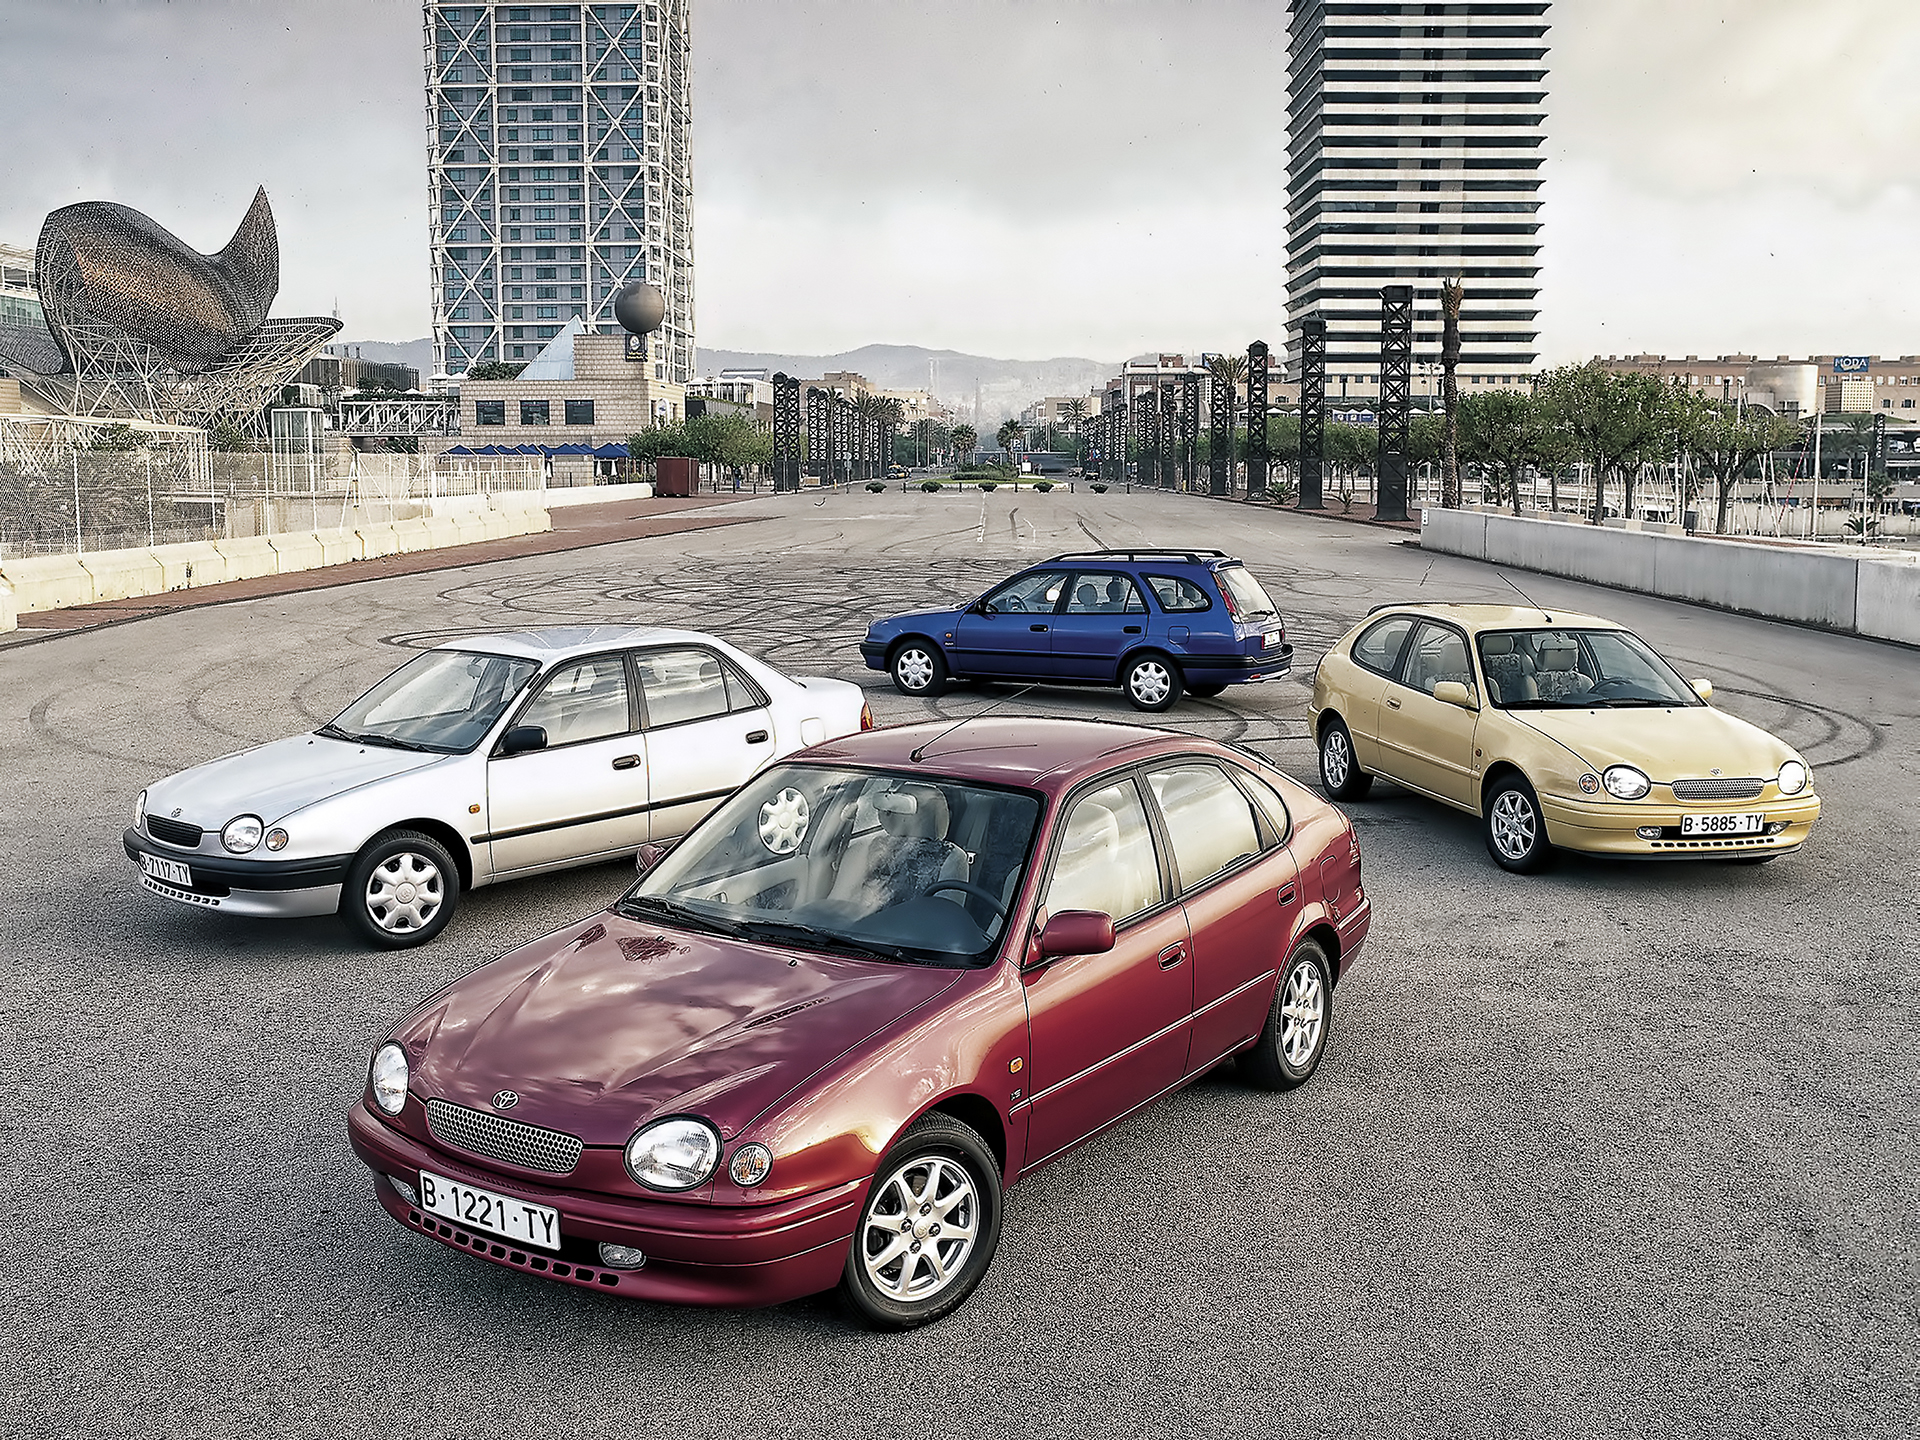 Europe - The 8th Generation Corolla (1995 - 2000)